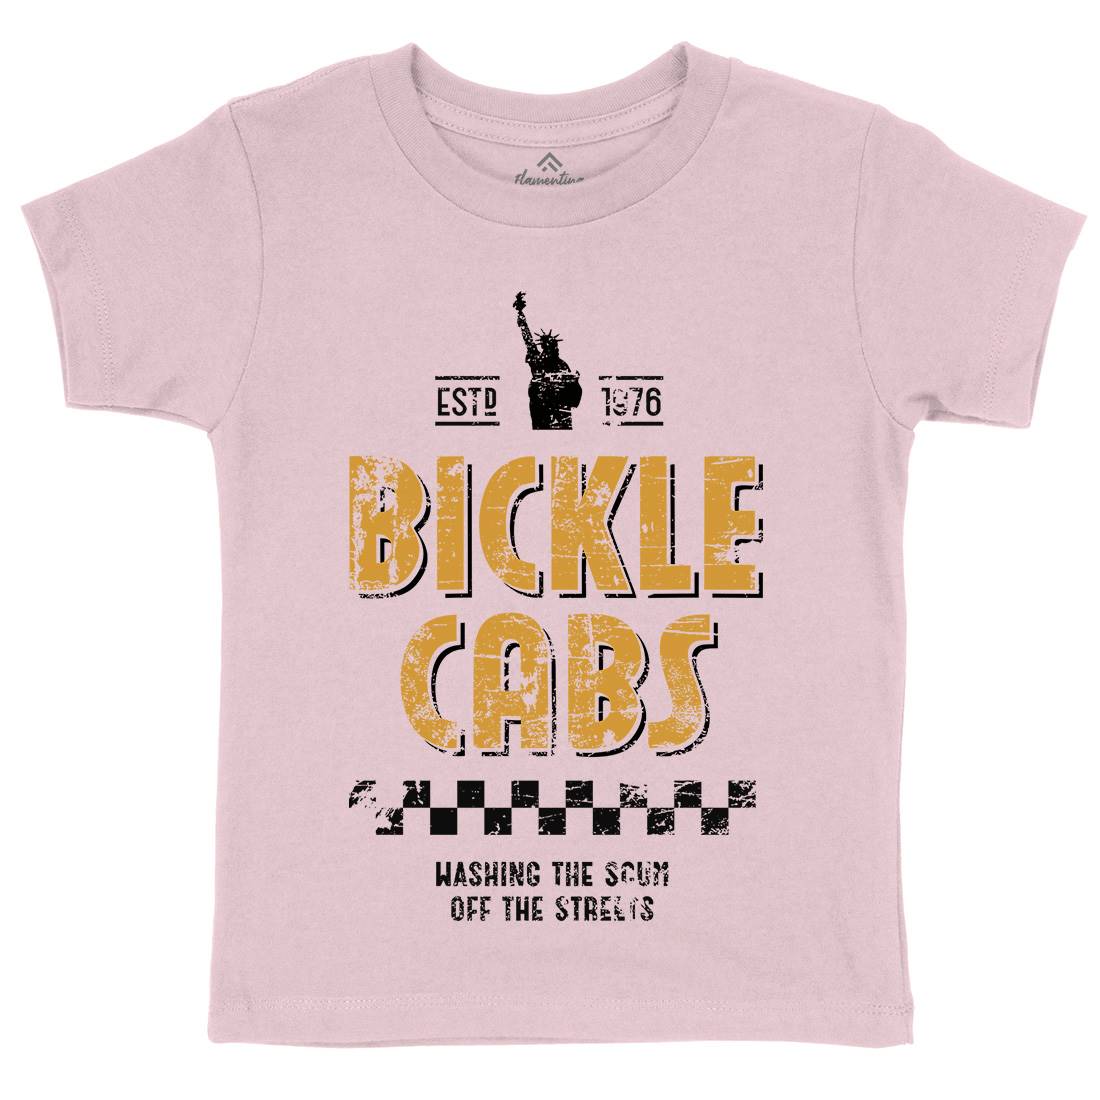 Bickle Cabs Kids Crew Neck T-Shirt Retro D306